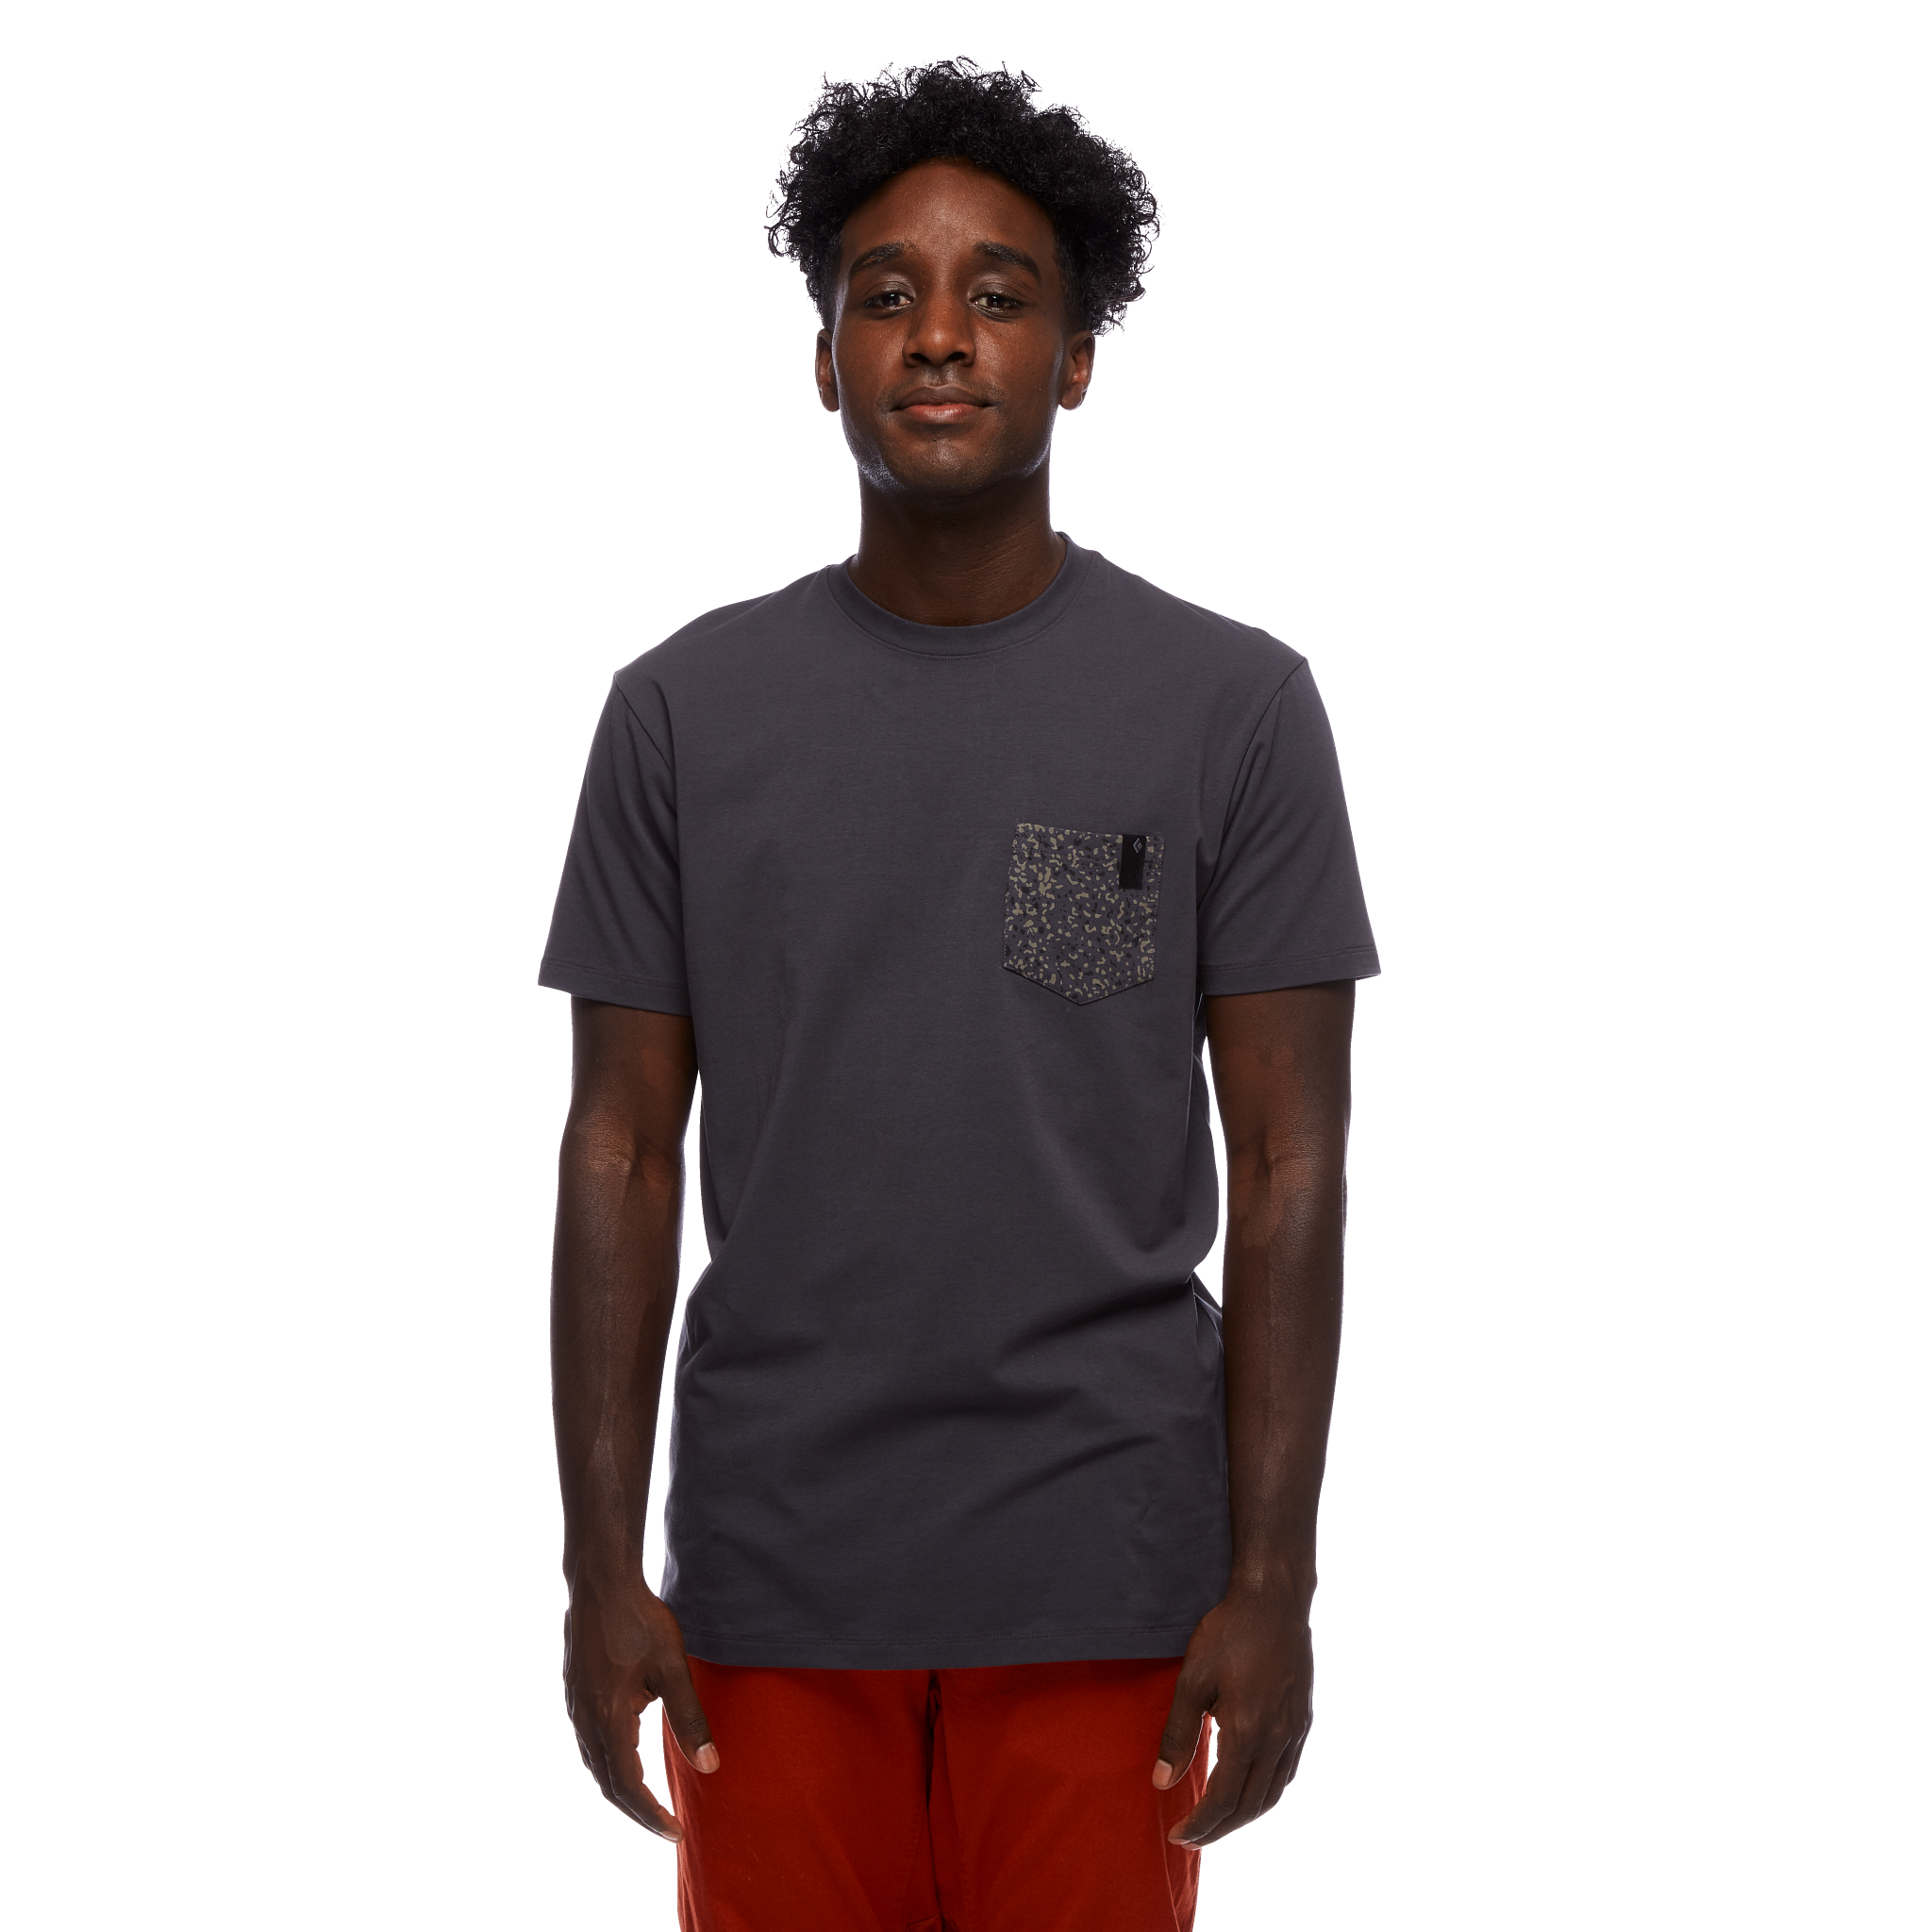 Black Diamond Equipment Men's Pocket Square T-Shirt, Medium Carbon Rock Texture Print